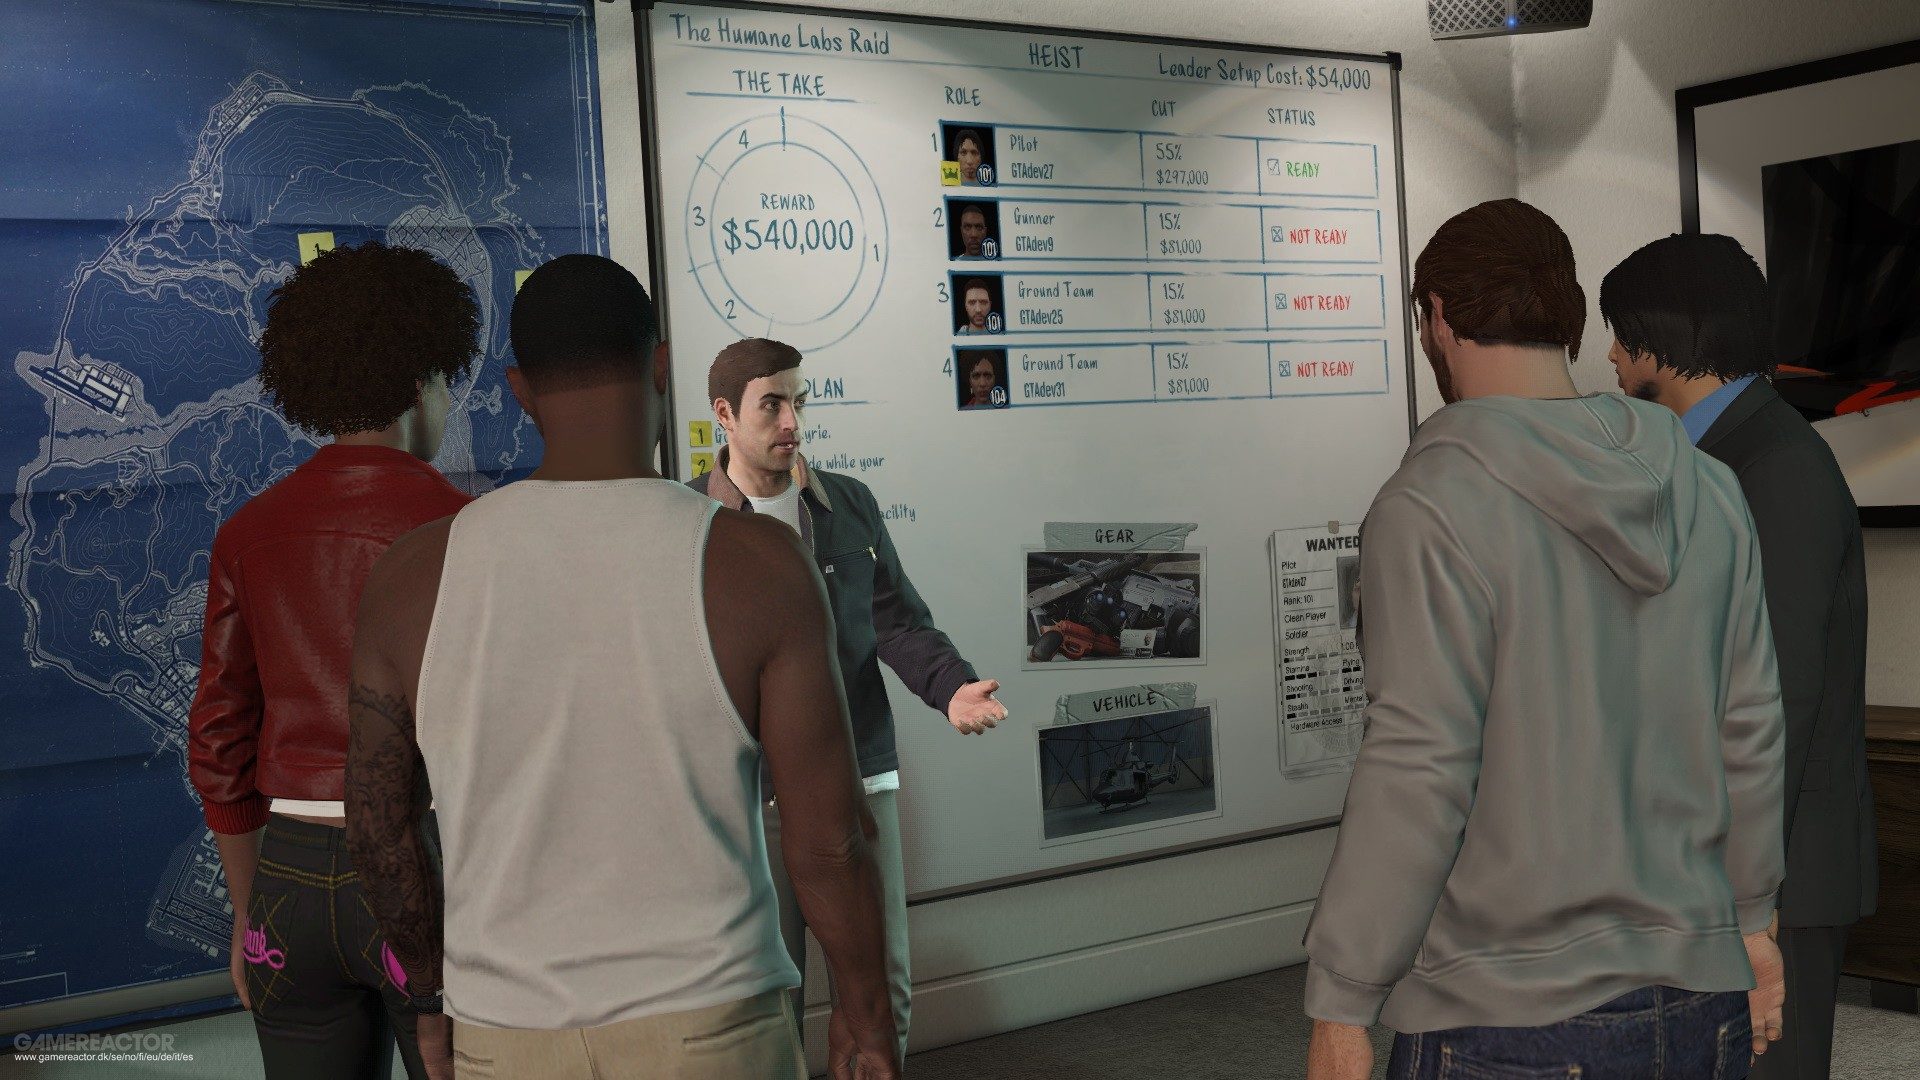 Grand Theft Auto V Análise - Gamereactor